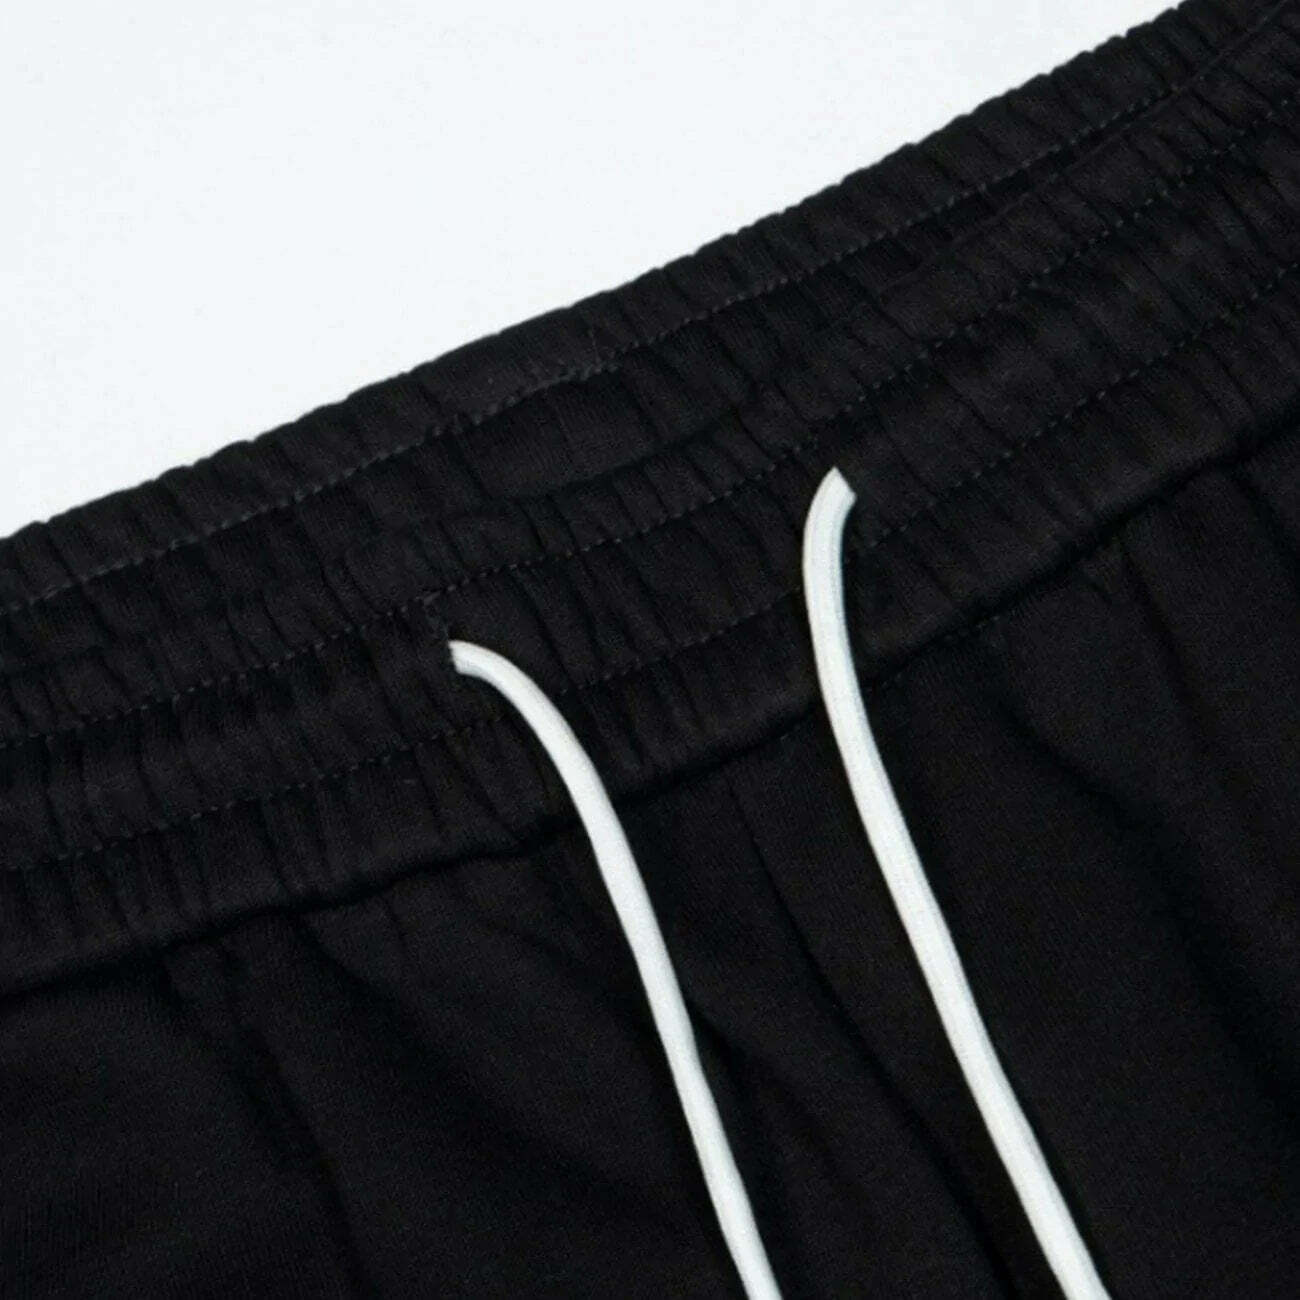 embroidered drawstring pants edgy & stylish streetwear 4841